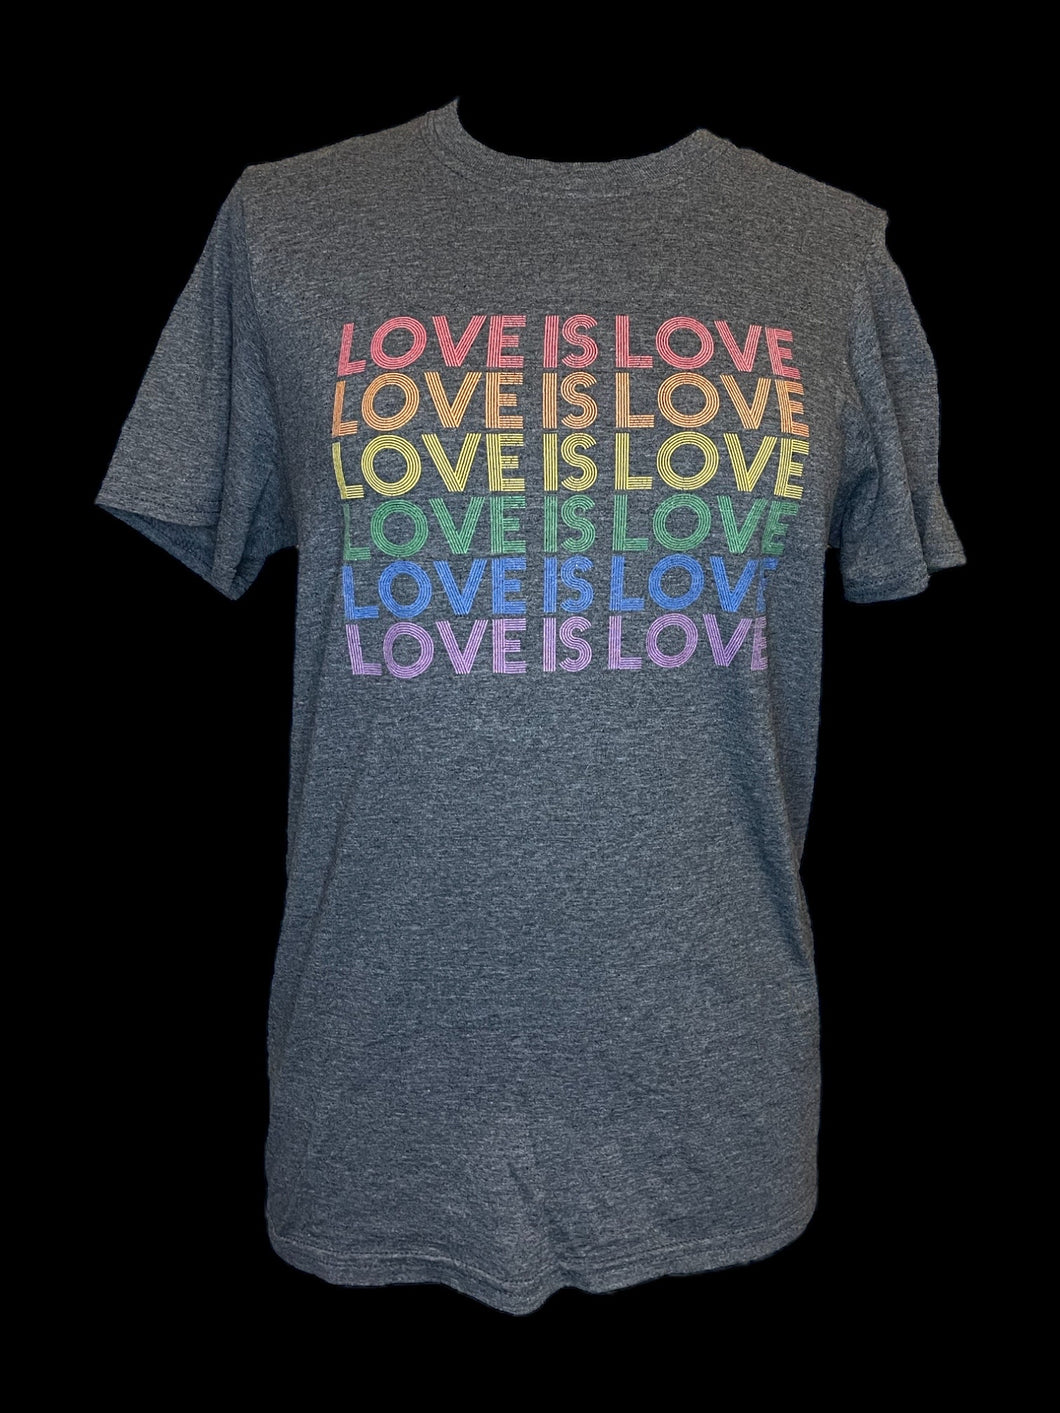 XL Heather grey & rainbow “Love is Love” graphic short sleeve crew neck top